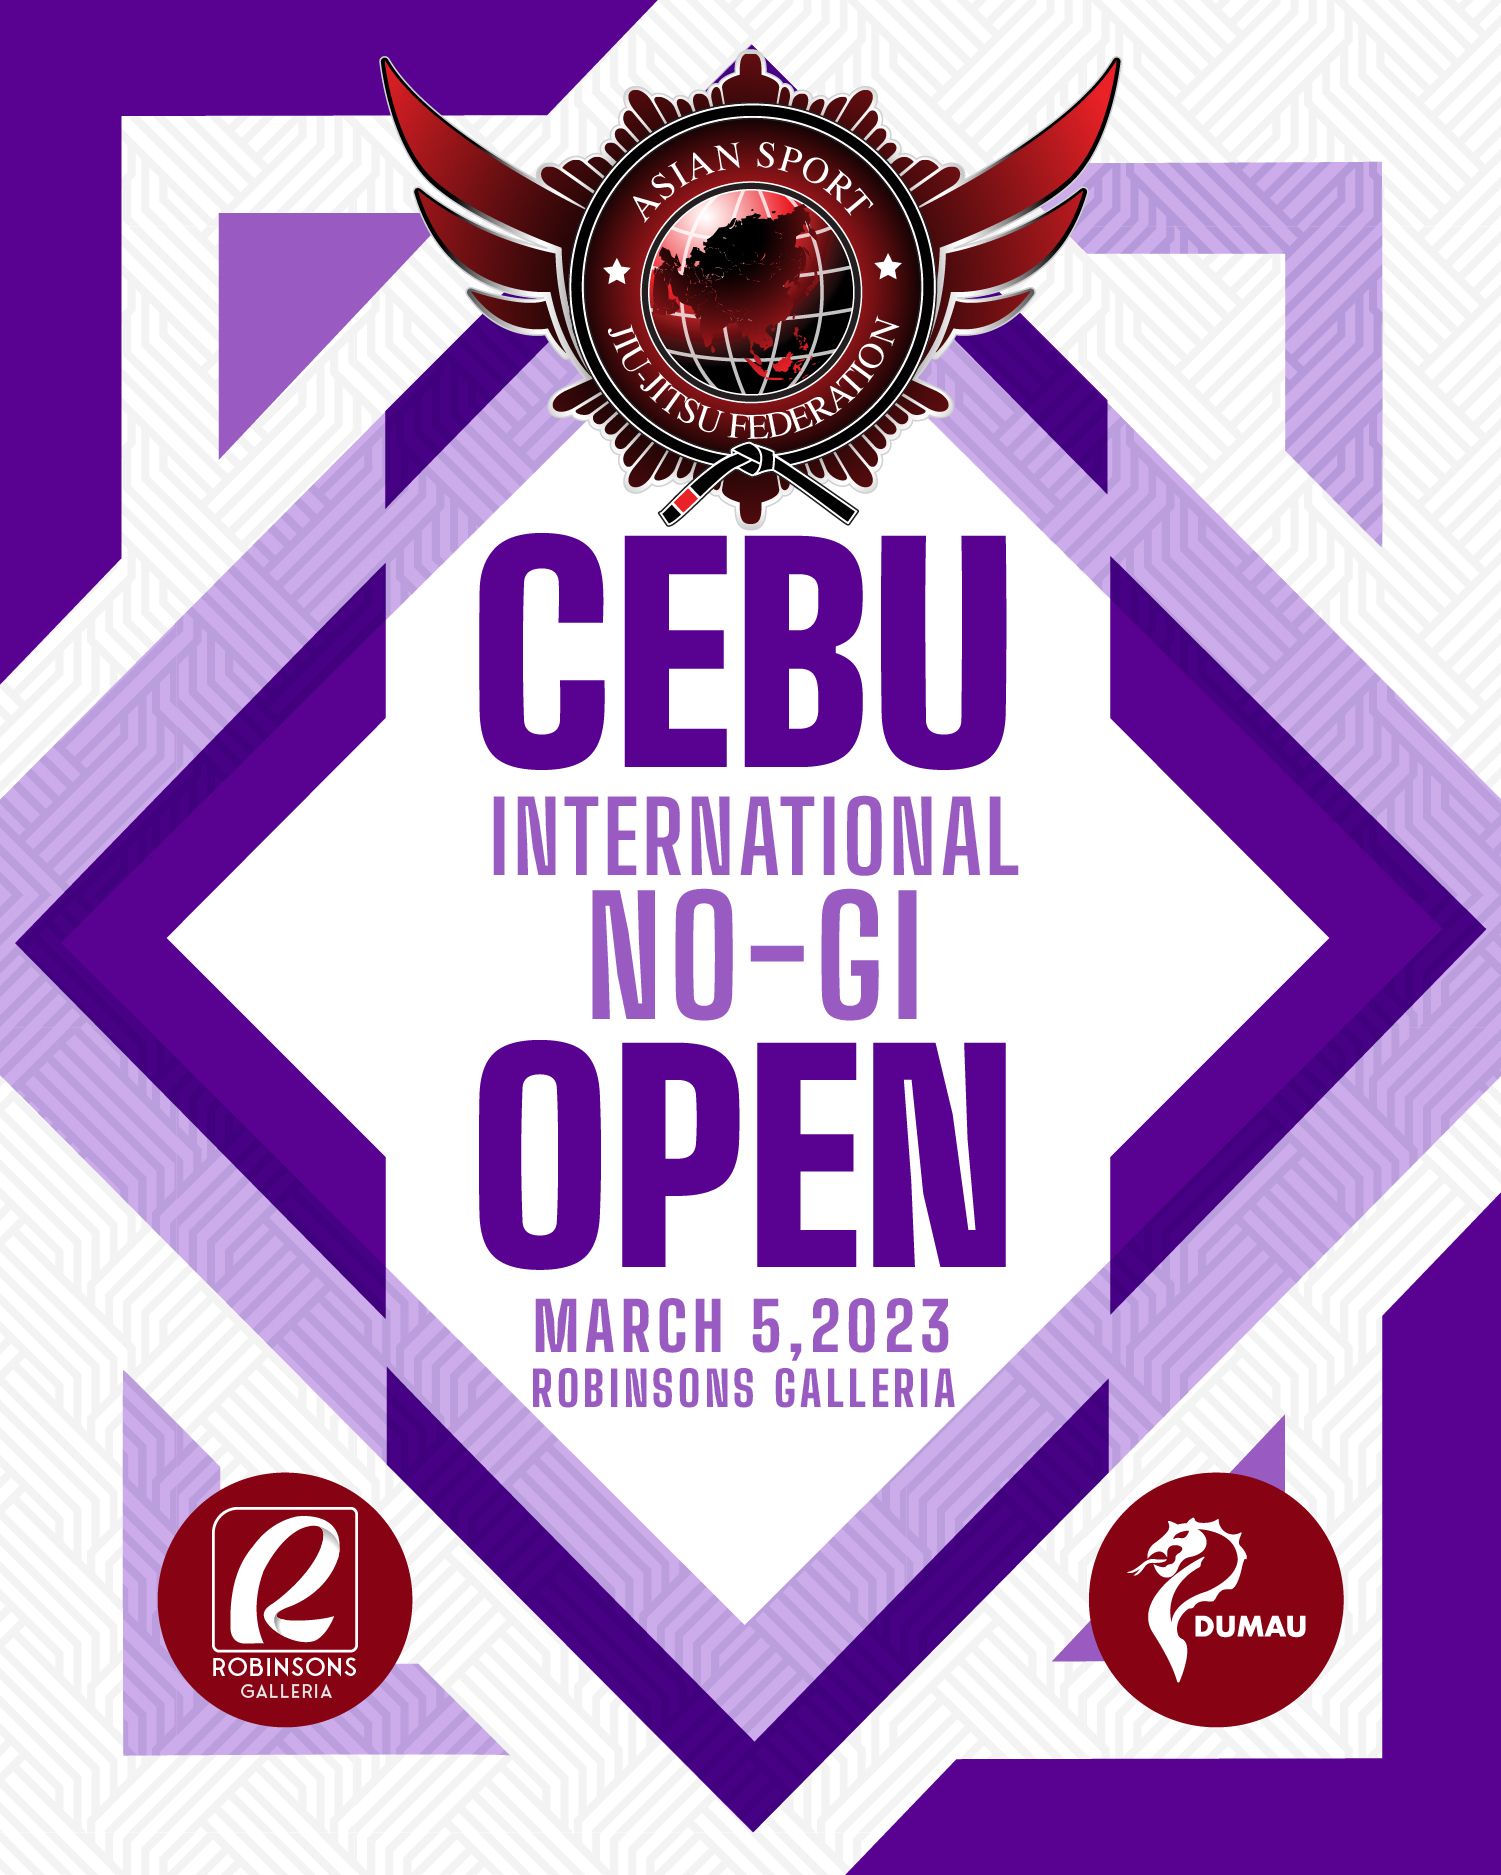 cebu international open no-gi championship 2023